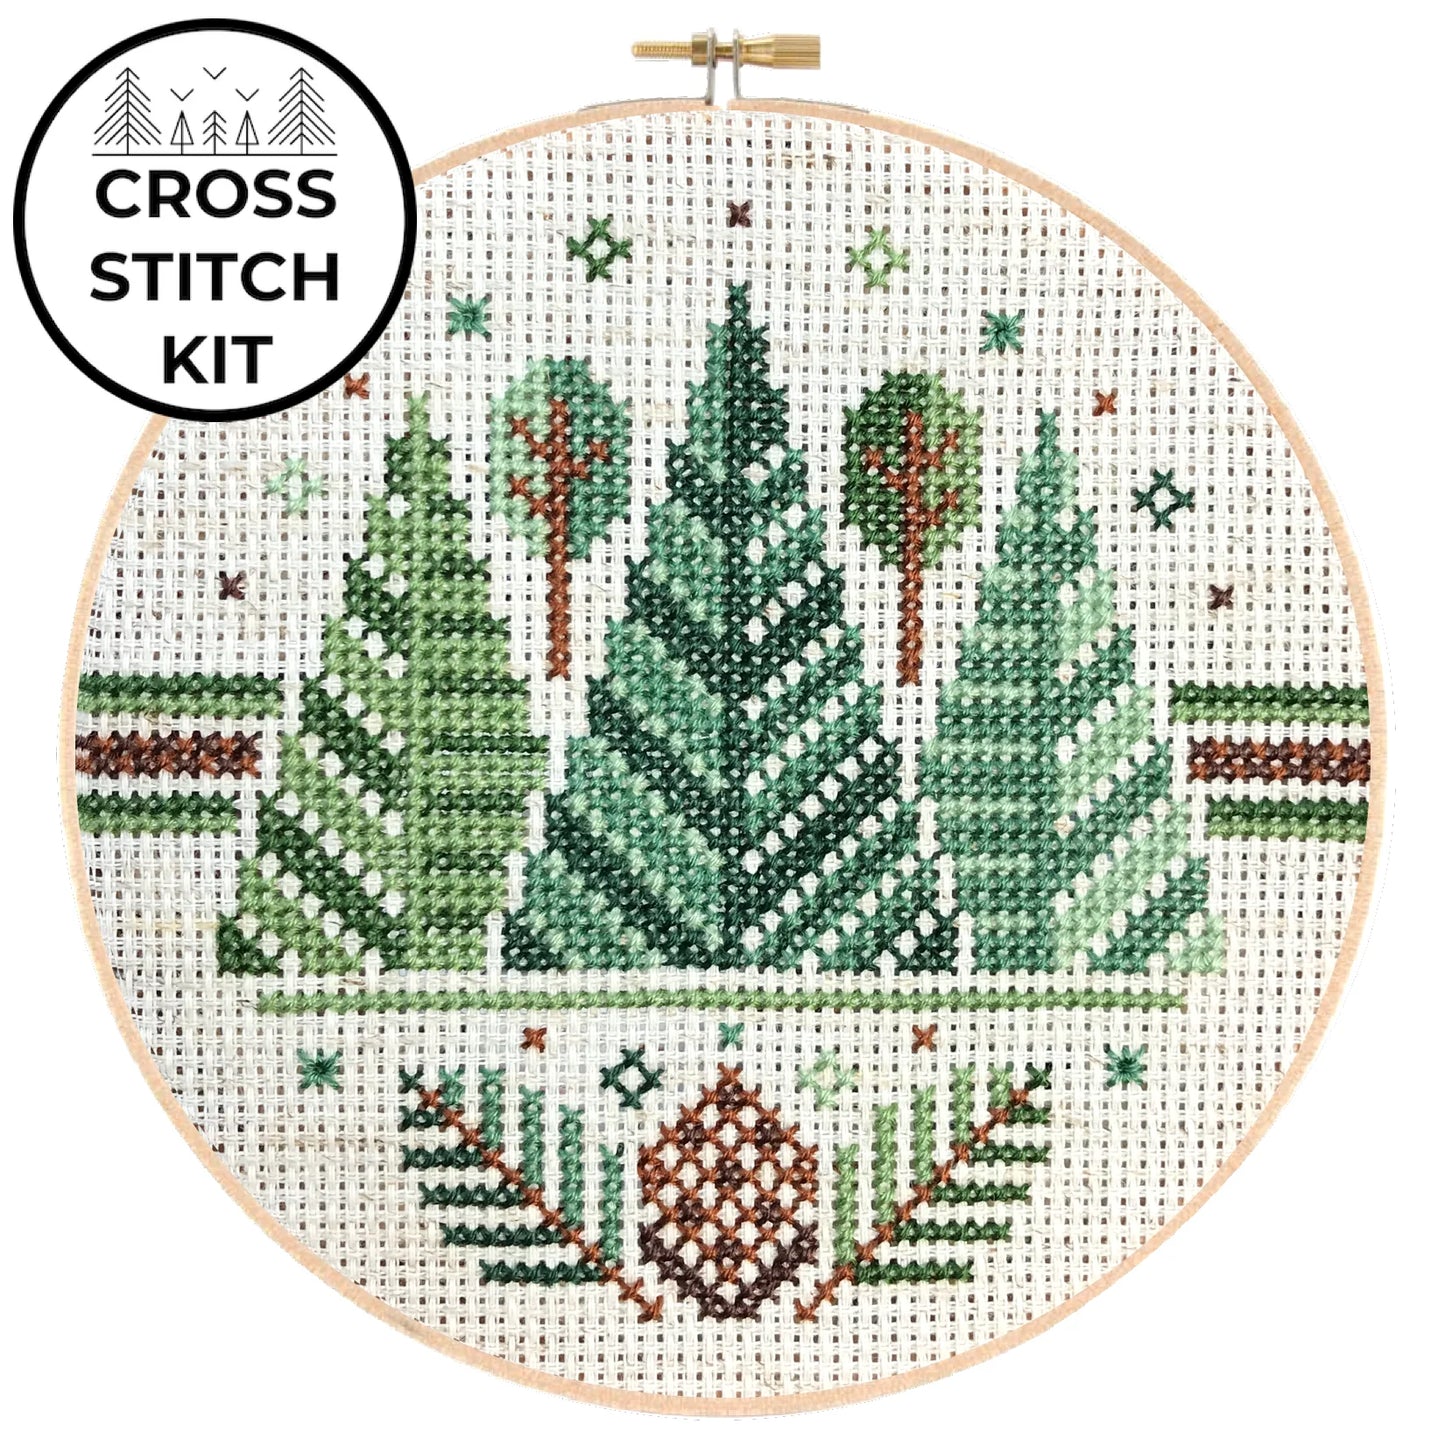 Three Pines Cross Stitch Kit by Pigeon Coop Designs